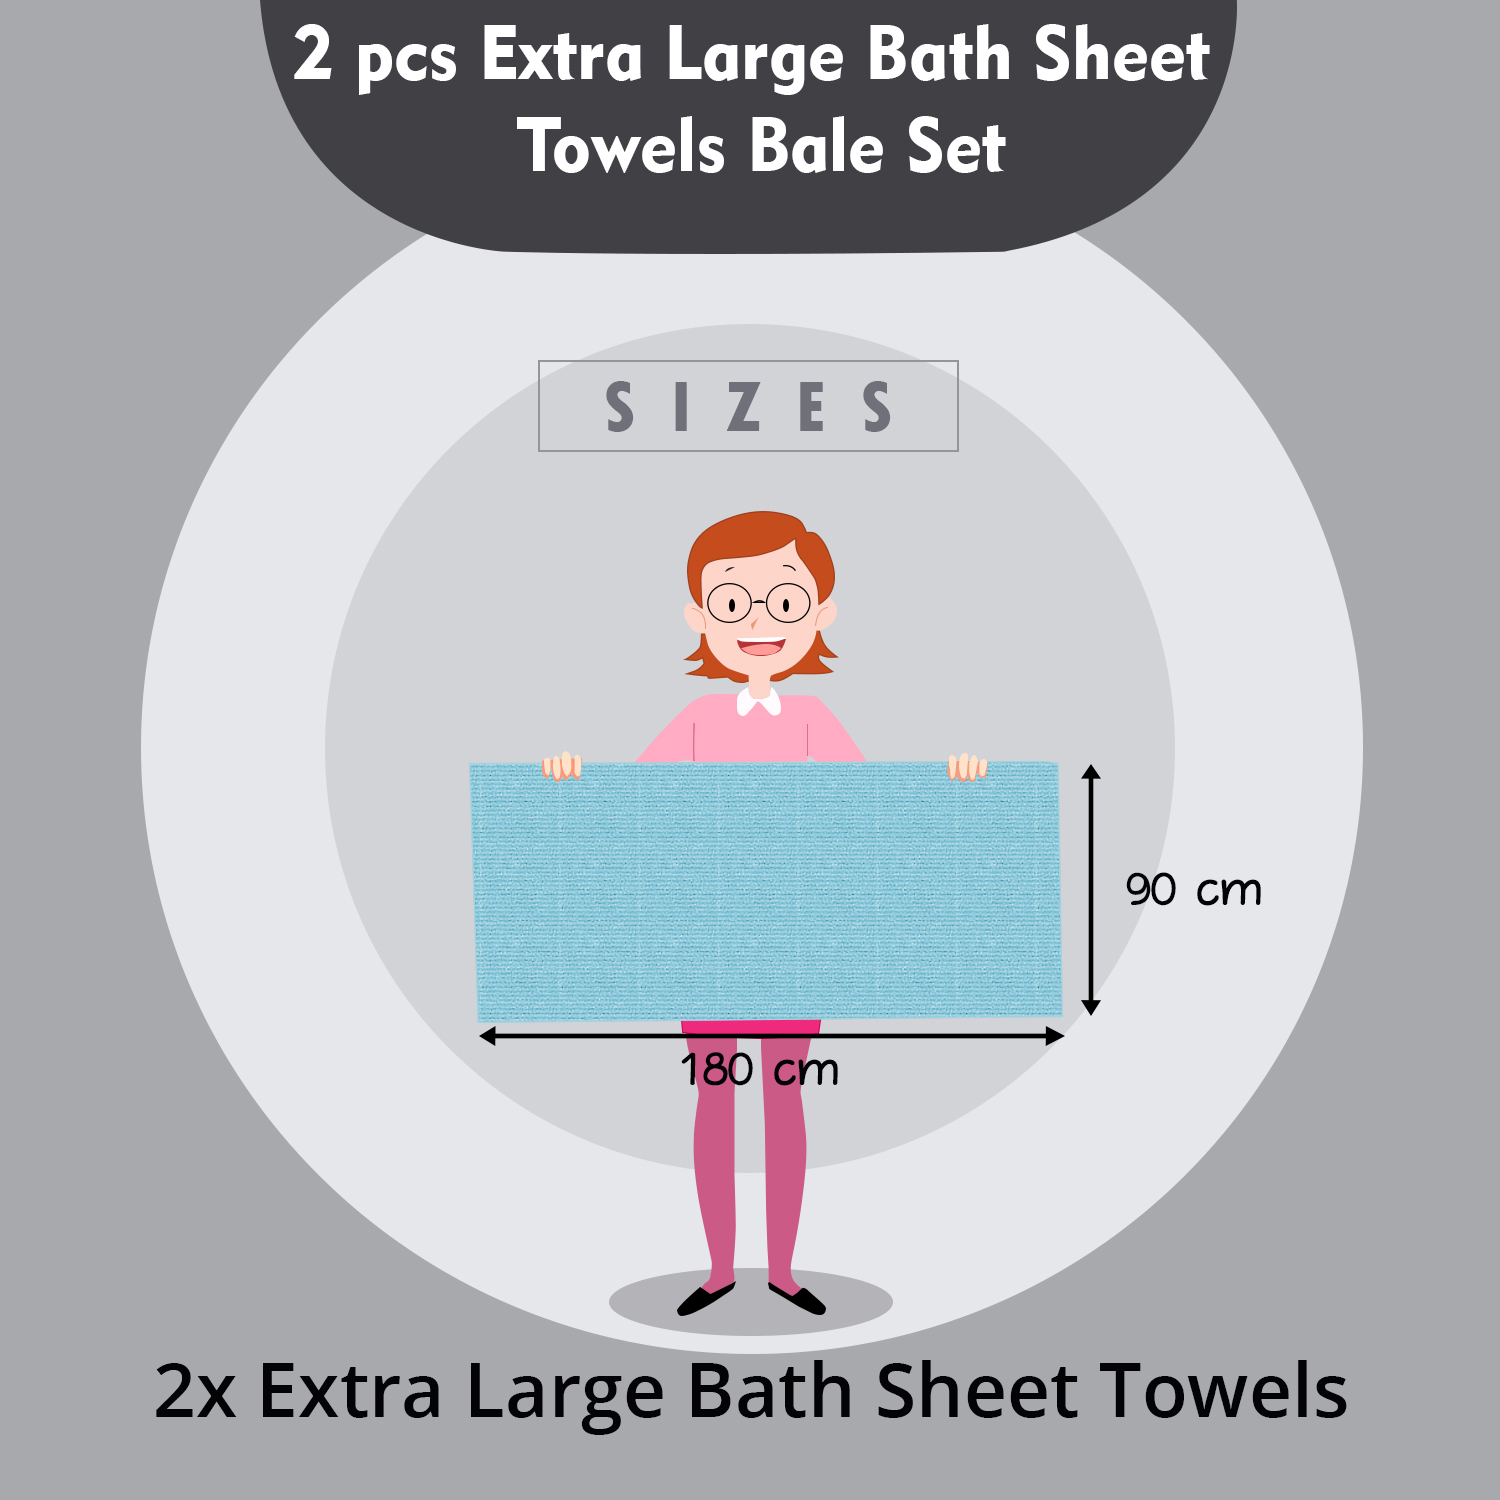 Bale Set 2pcs Burgundy Premium Plain Extra Large Bath Sheet Towel